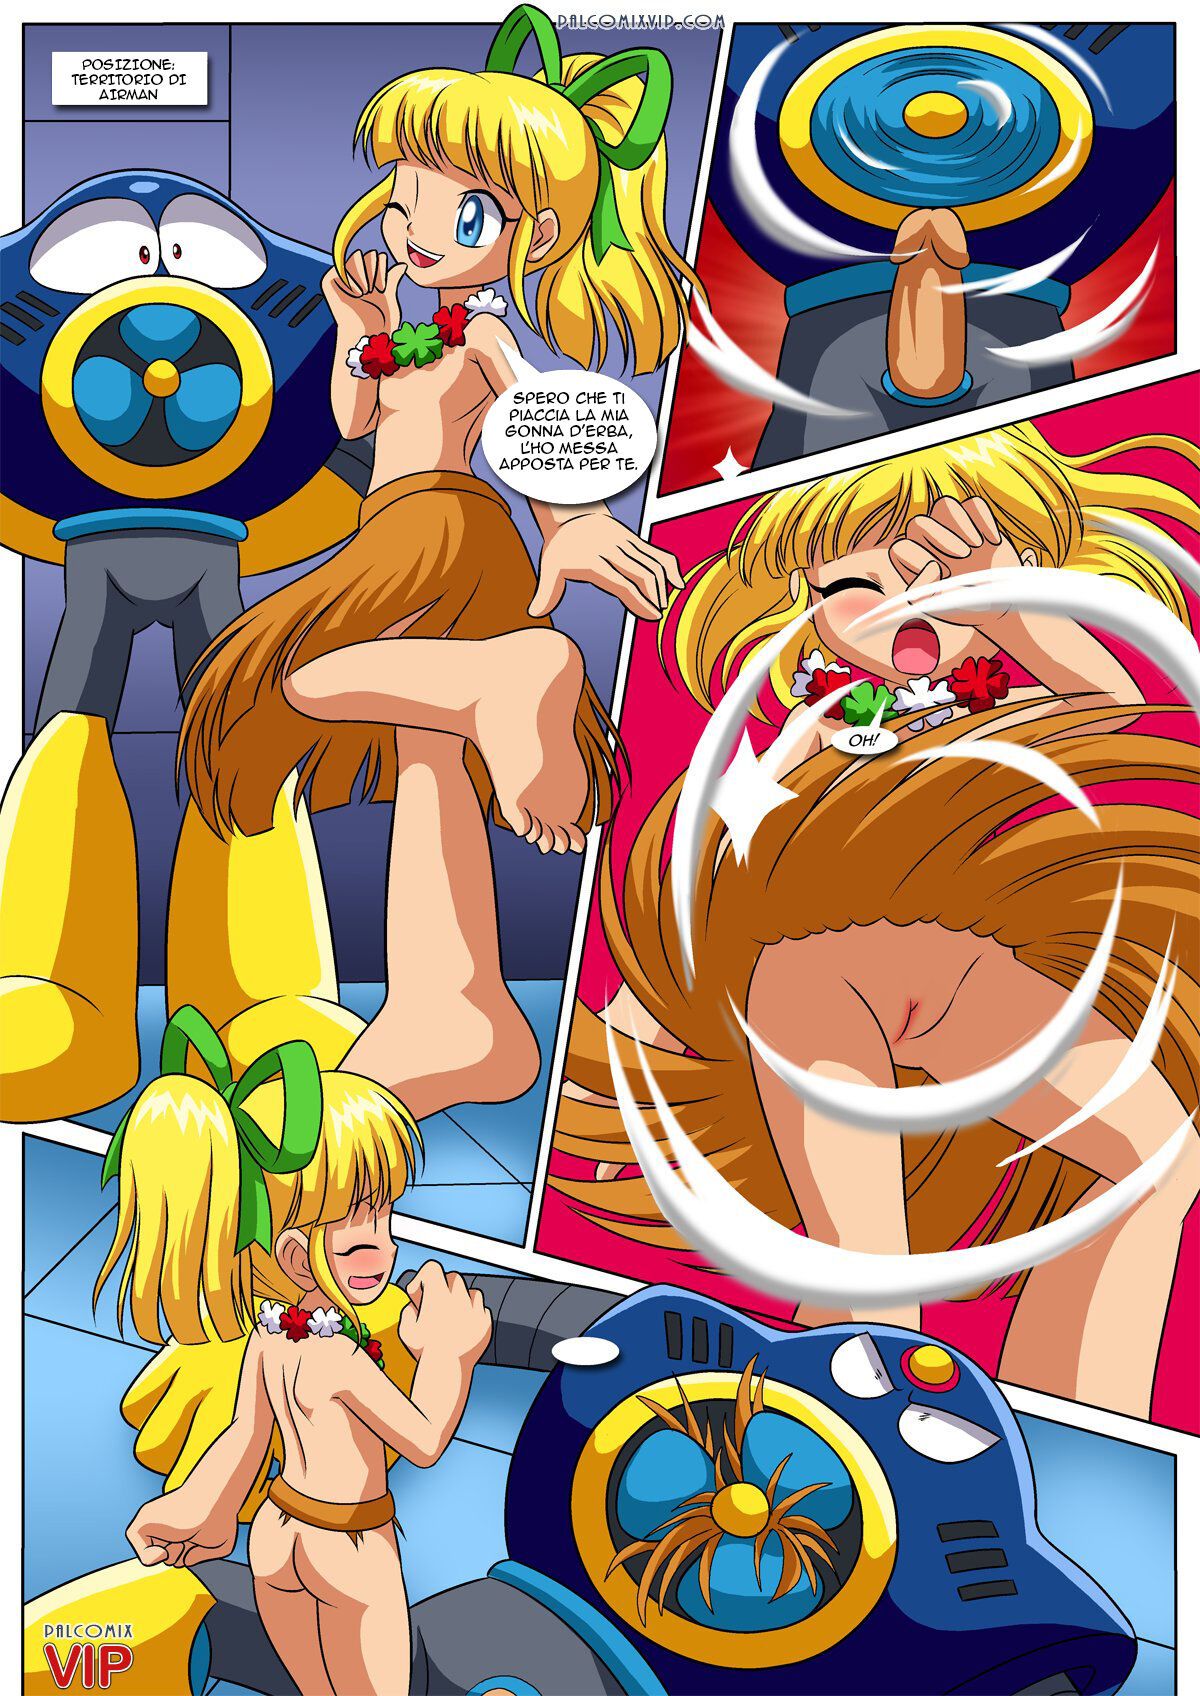 [Palcomix] Rolling Buster 2 (Mega Man) (italian) 8